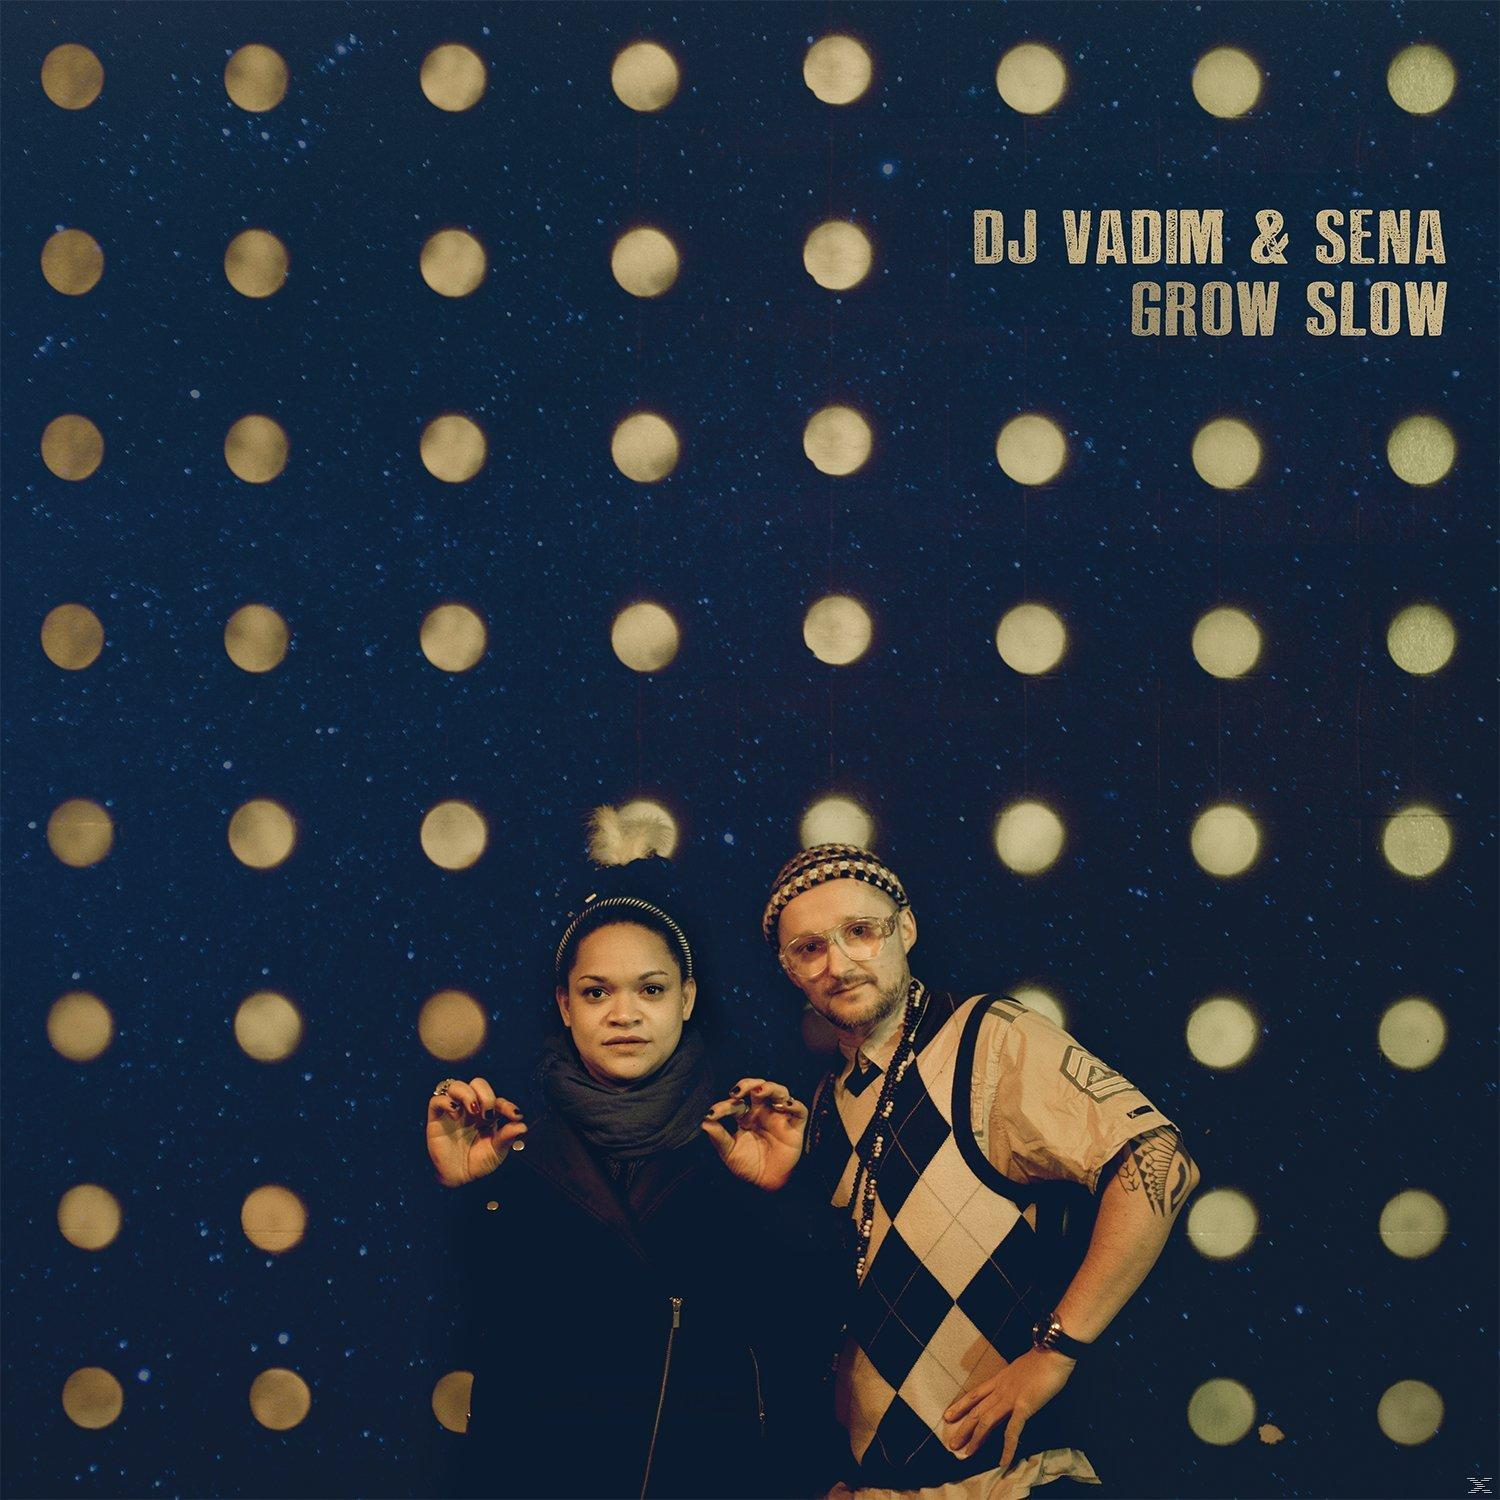 Vadim, Dj Bonus-CD) + Sena (LP - - Slow Grow